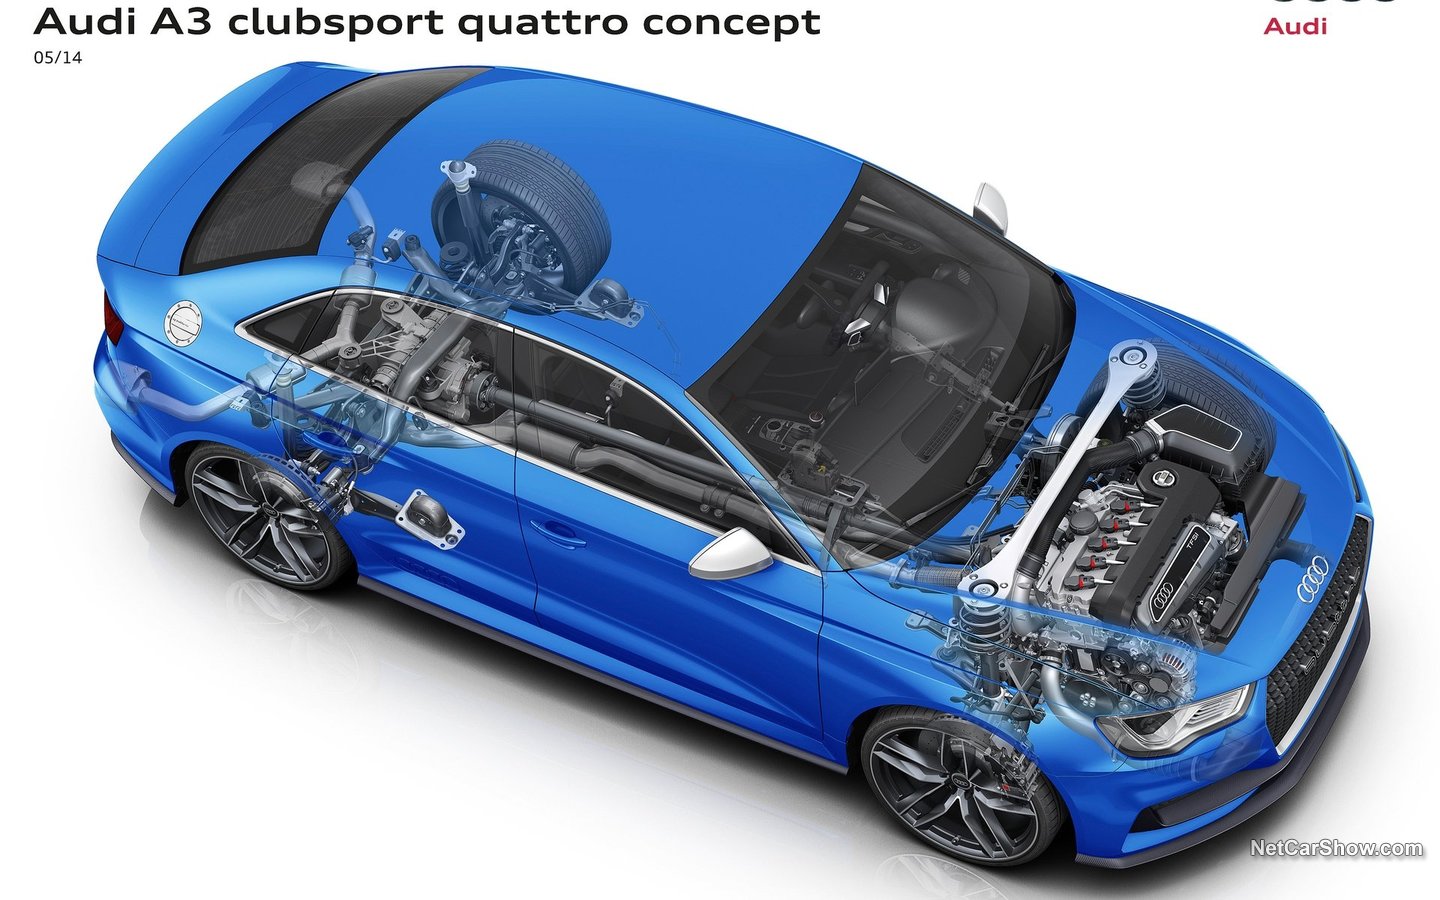 Audi A3 Clubsport Quattro Concept 2014 6cdc0607